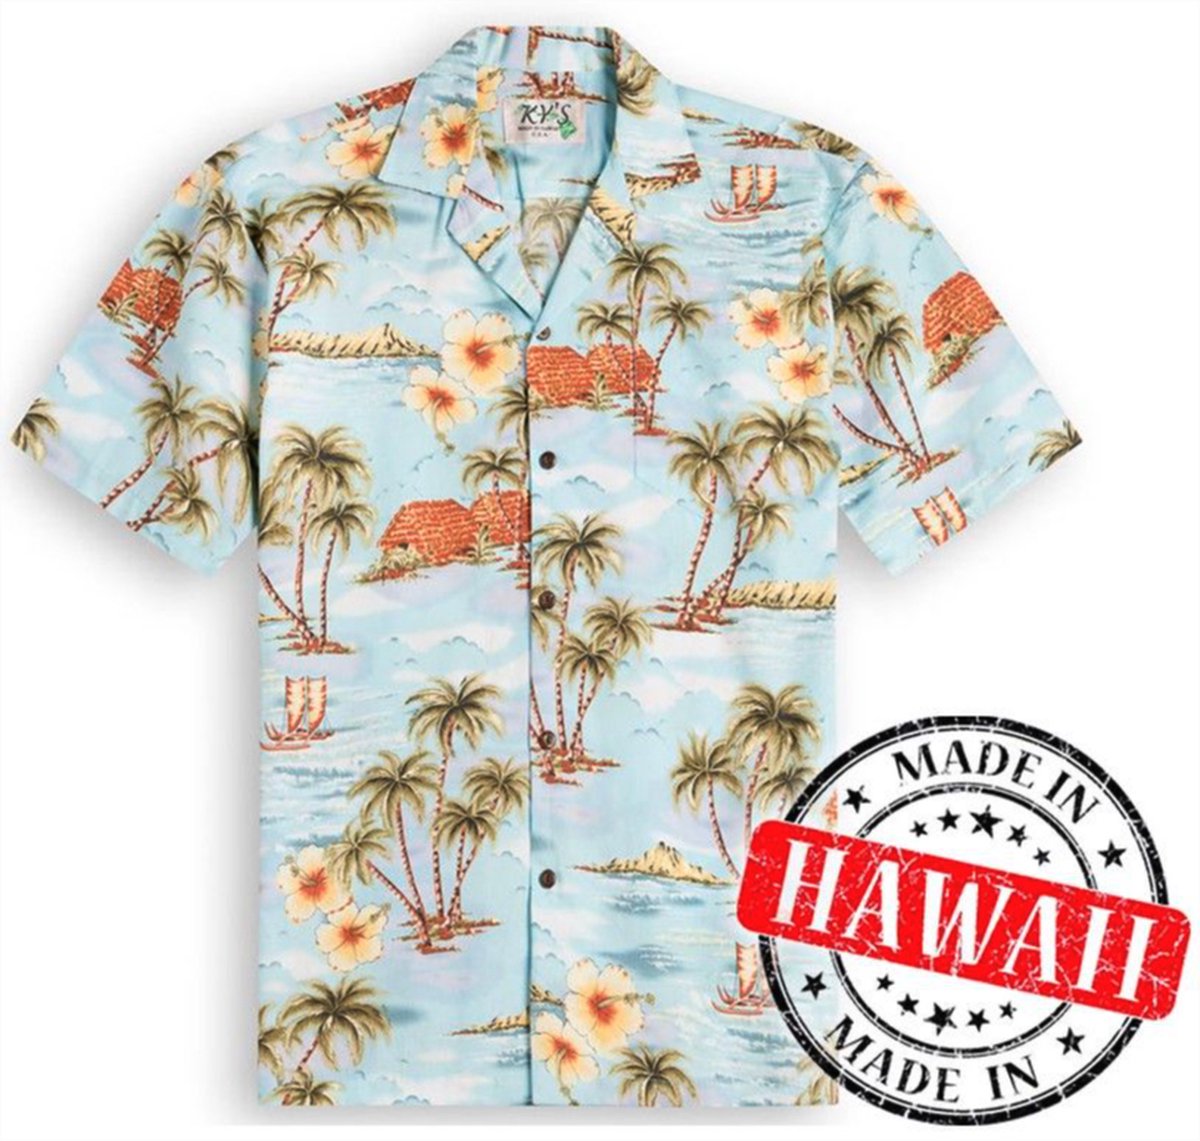 Hawaii Blouse - Shirt - Hemd "Leven op Hawaii" - 100% Katoen - Aloha Shirt - Heren - Made in Hawaii Maat M